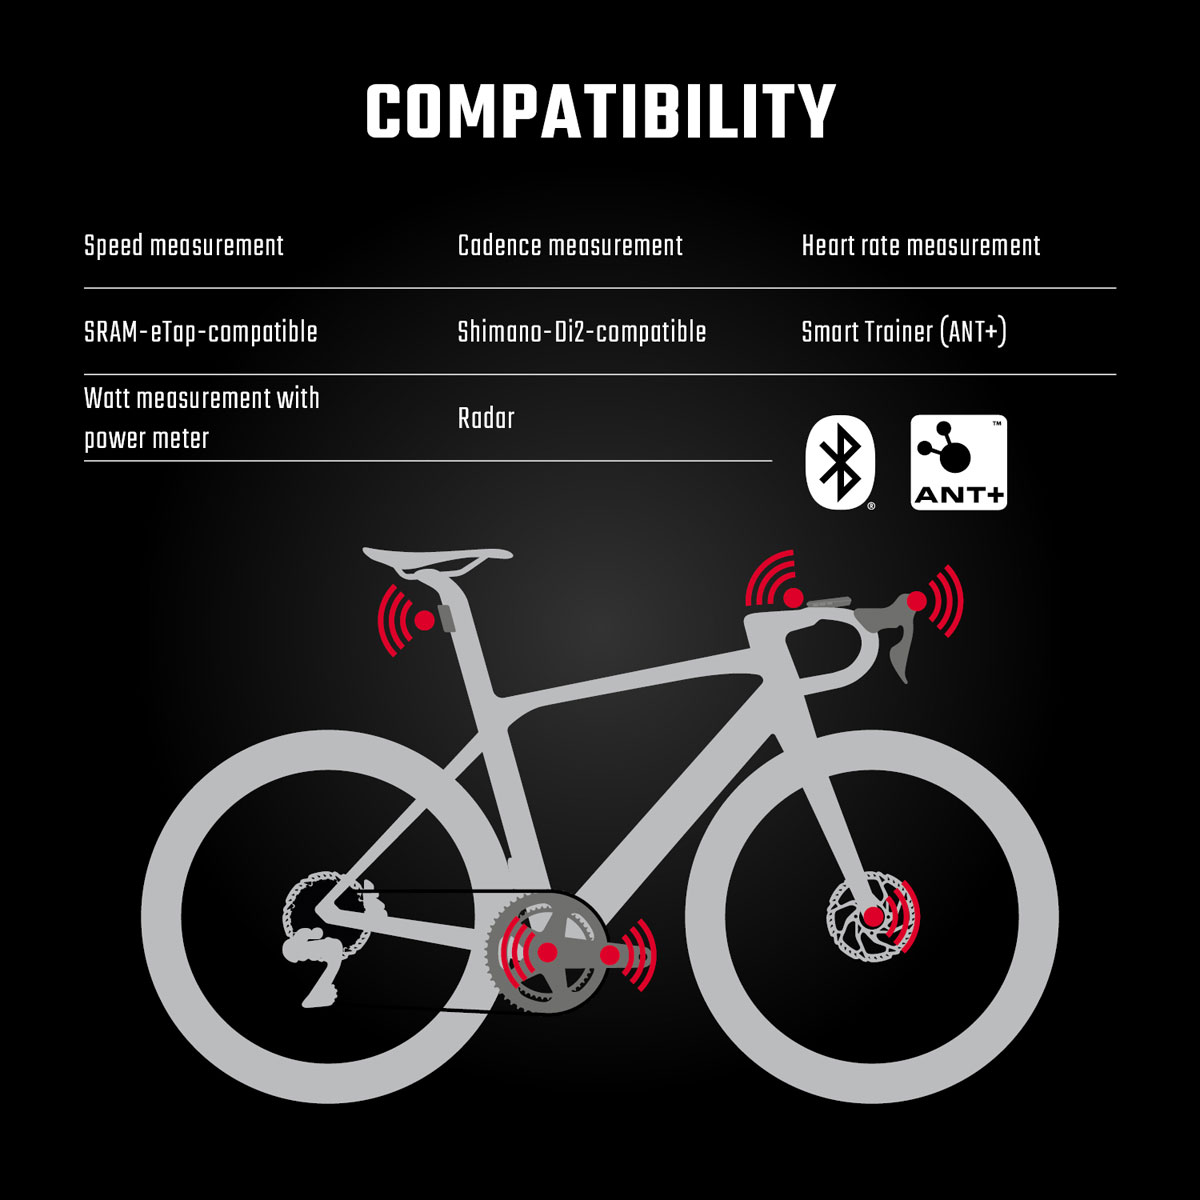 Sigma Sport Compteur Vélo GPS - ROX 11.1 EVO - Sensor Set - noir - BIKE24